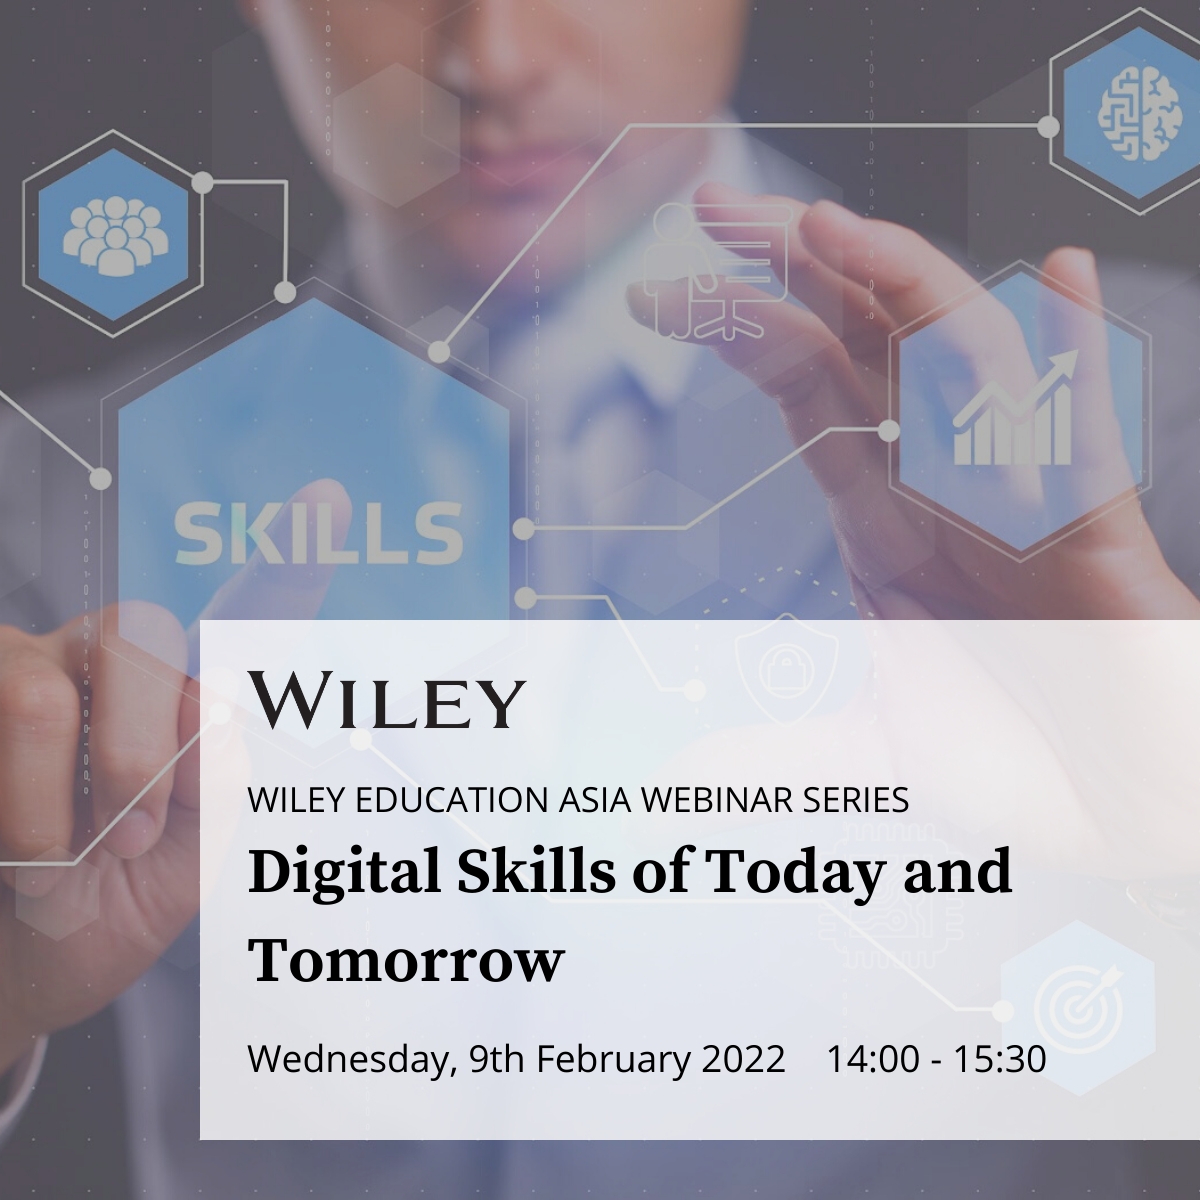 WILEY EDUCATION ASIA WEBINAR SERIES: Digital Skills of Today and Tomorrow